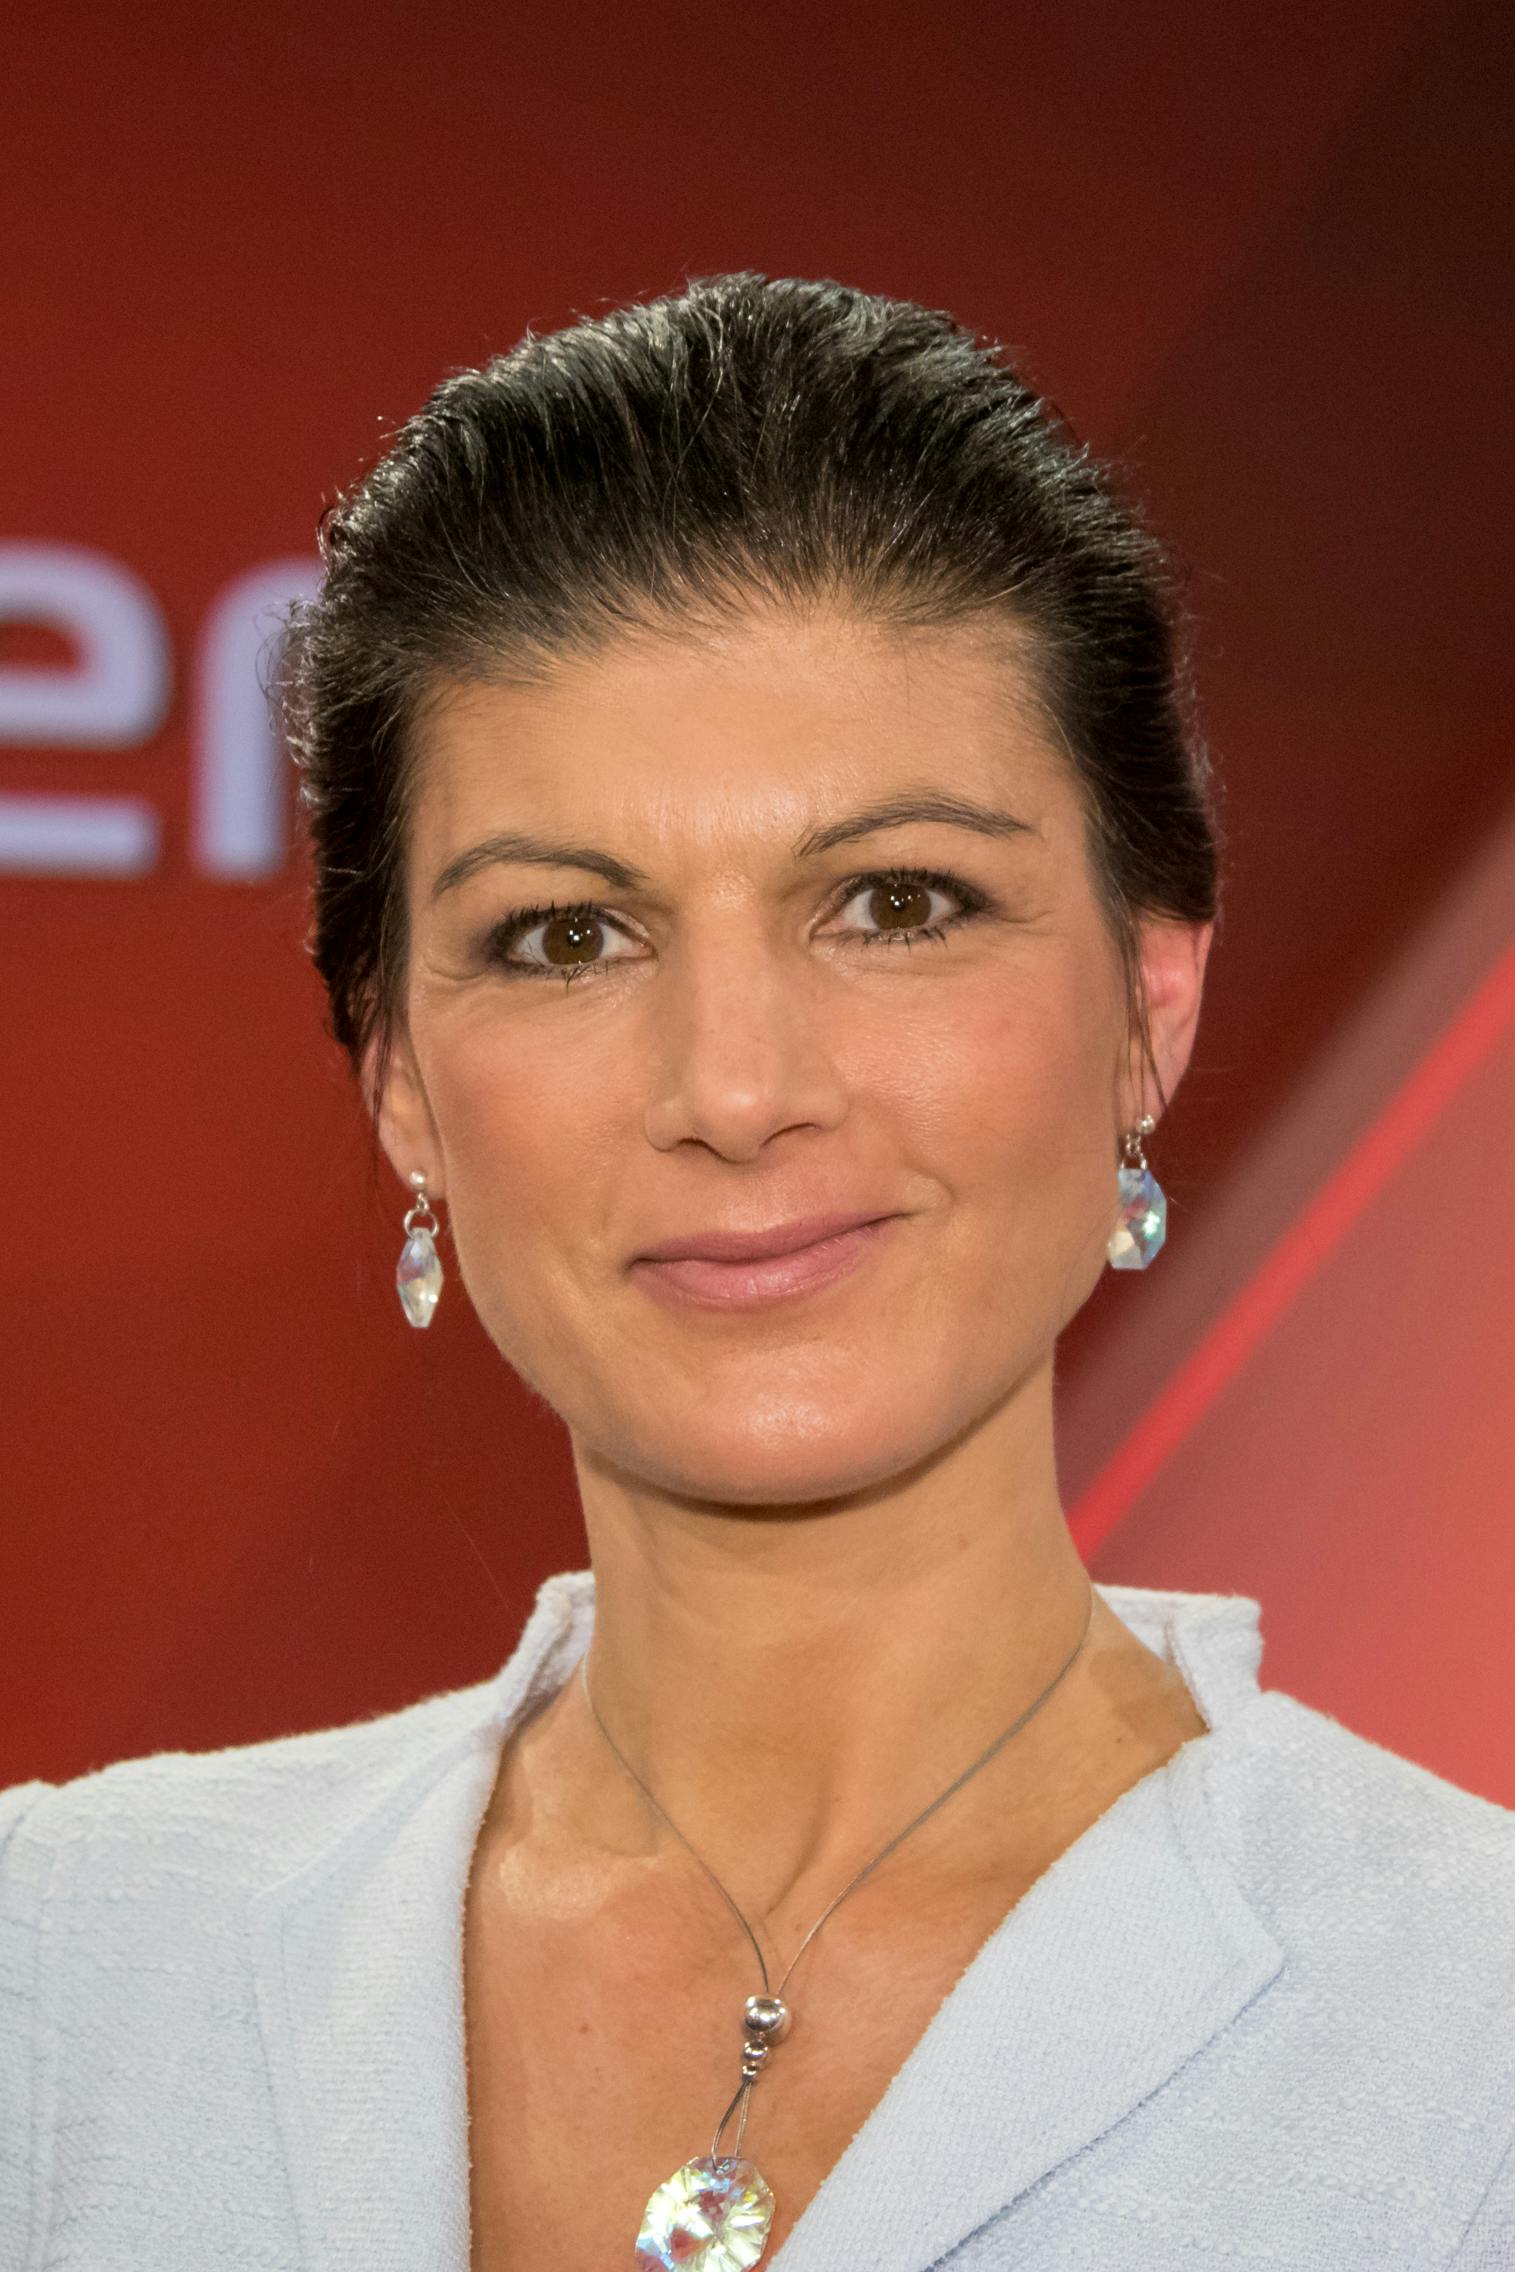 Sahra (Sarah) Wagenknecht